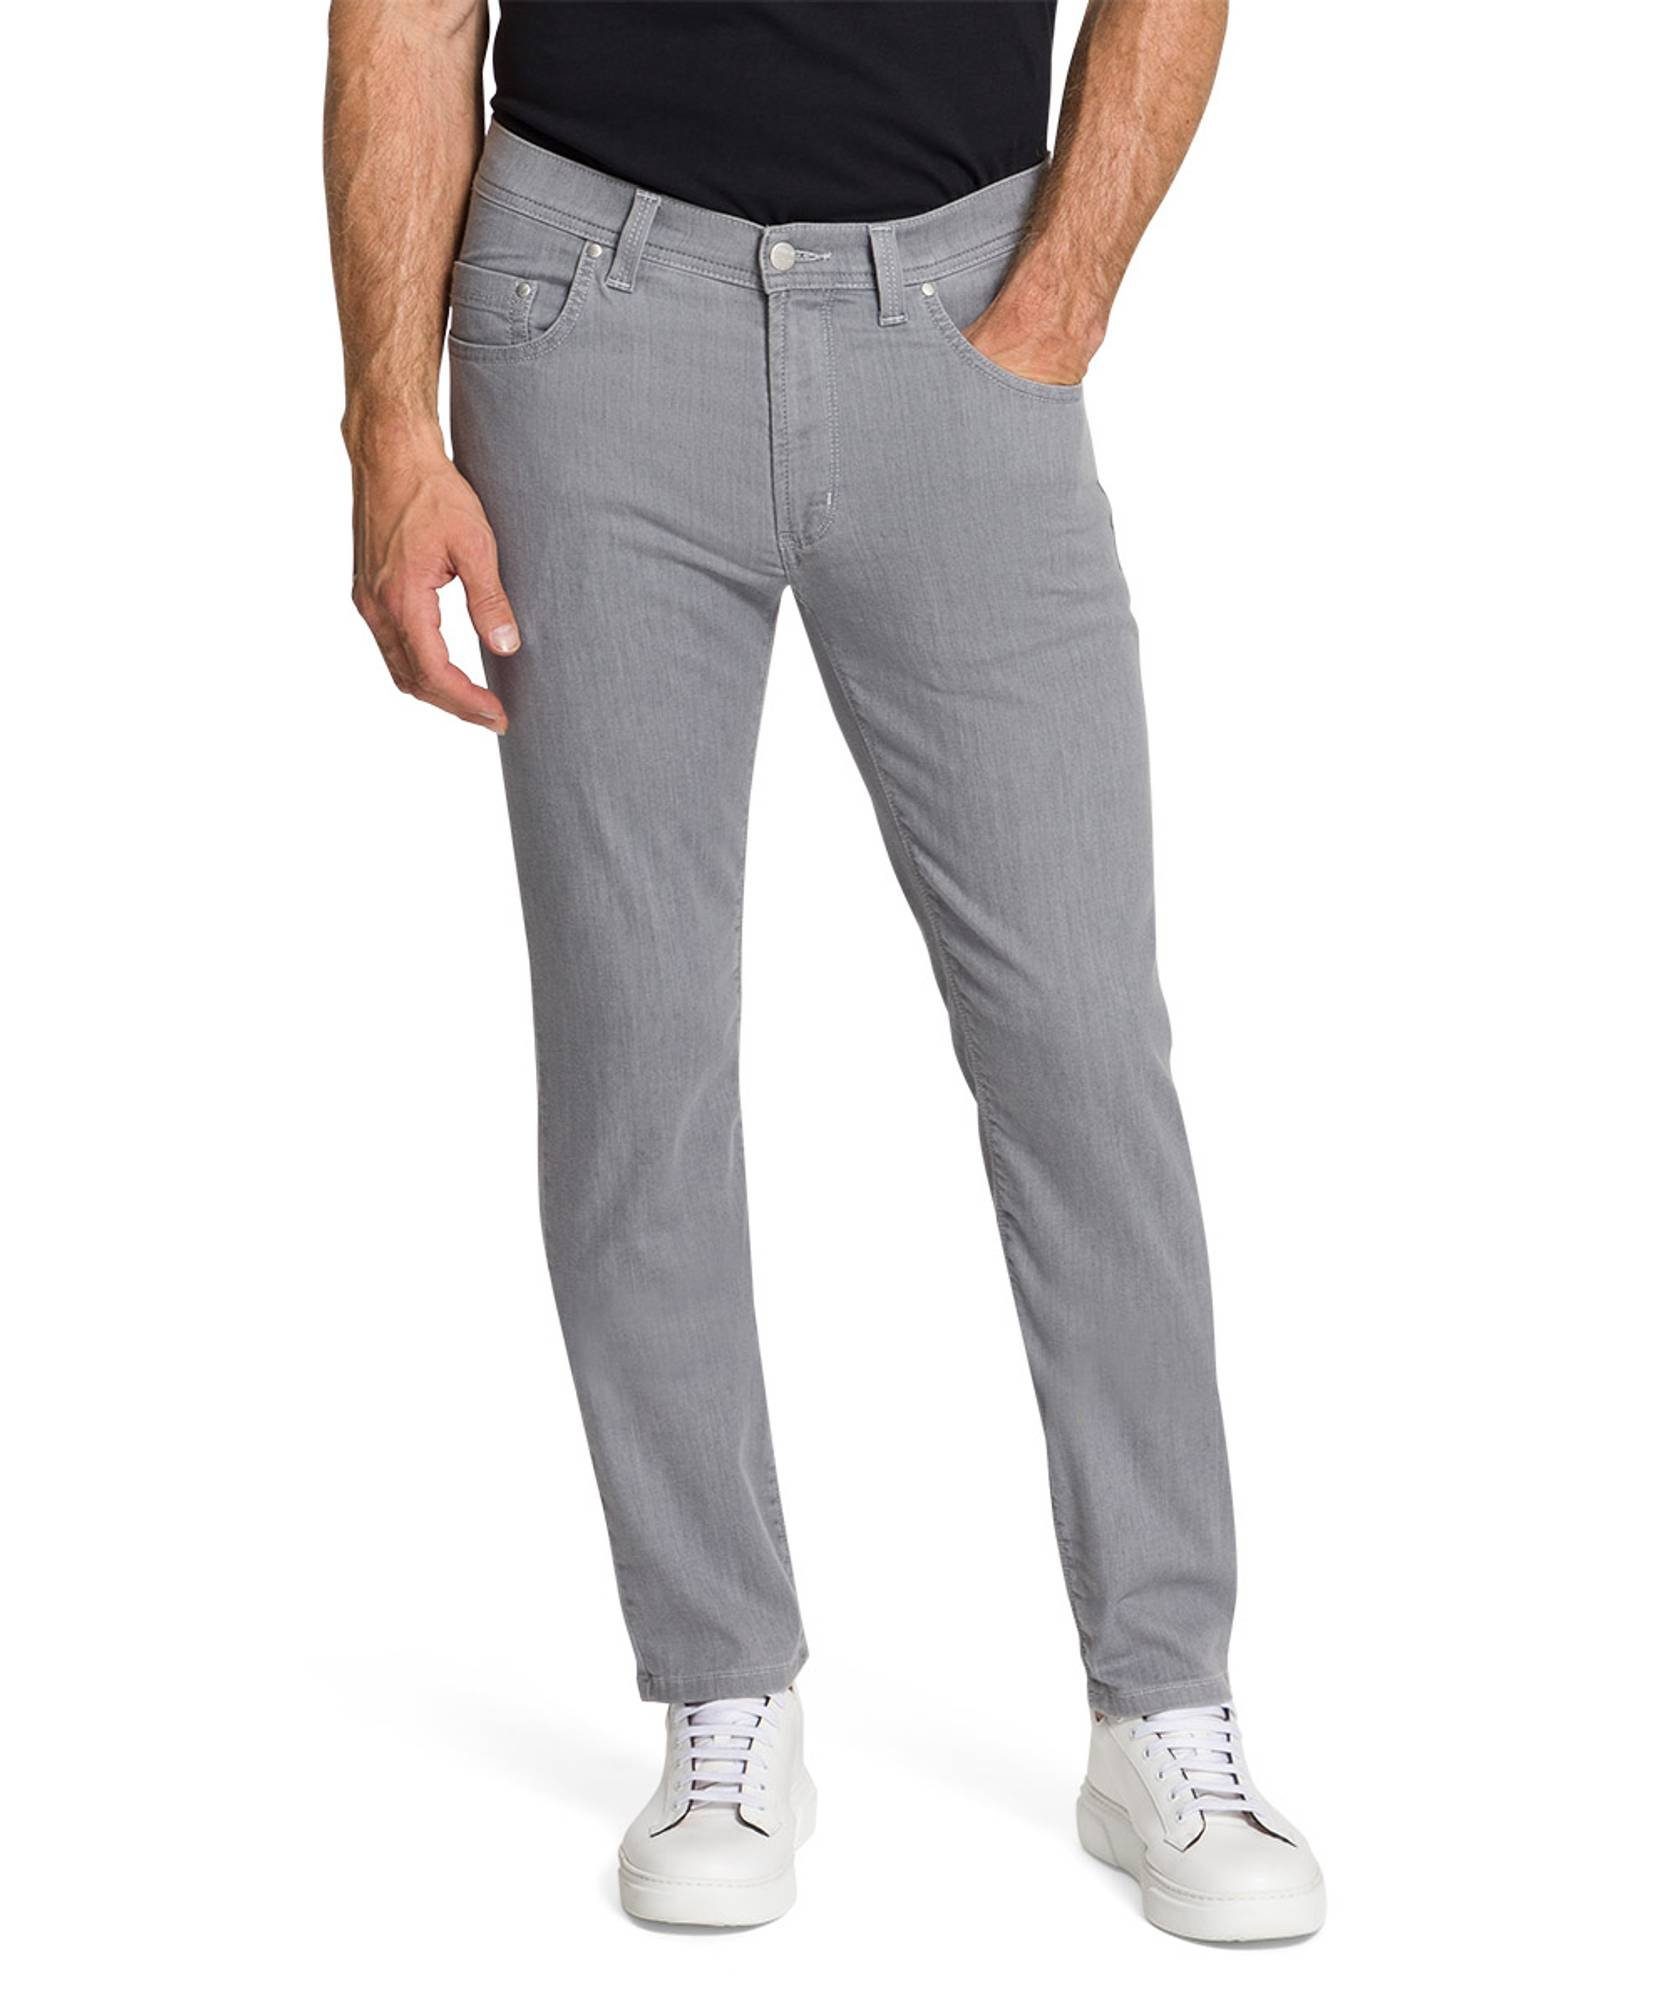 grey 5-Pocket-Jeans Jeans Pioneer light Authentic 16801.6615 (9841) PO kernig stonewash